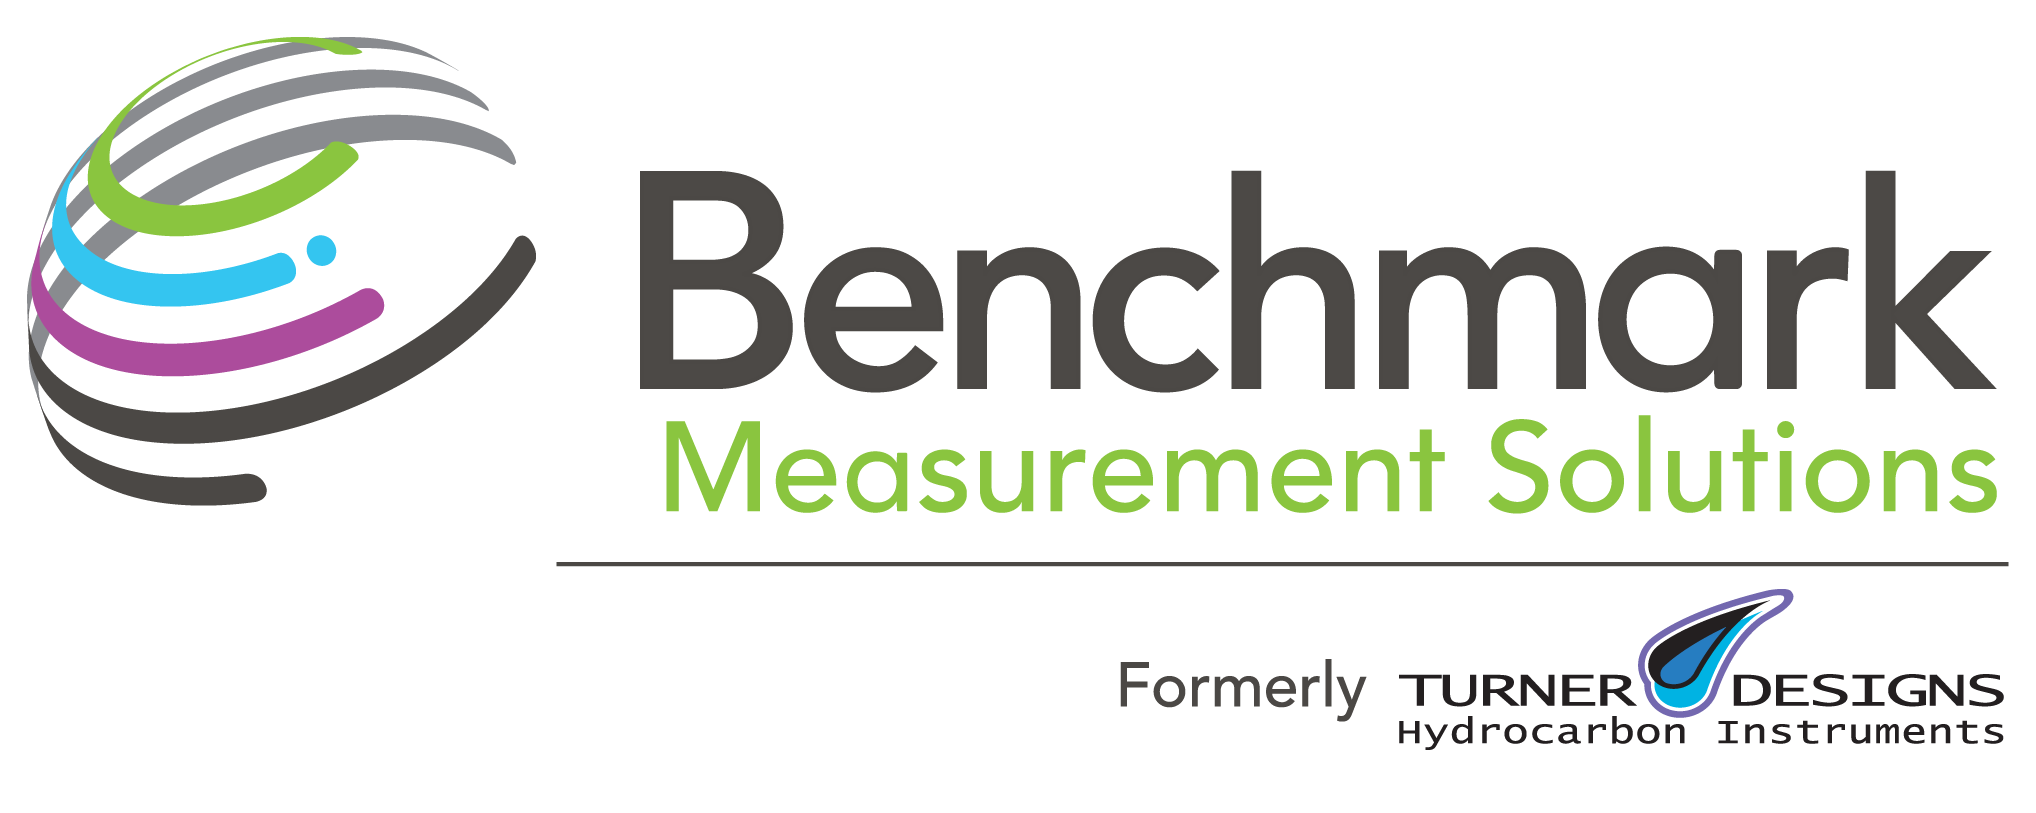 Benchmark Measurement Solutions Logo